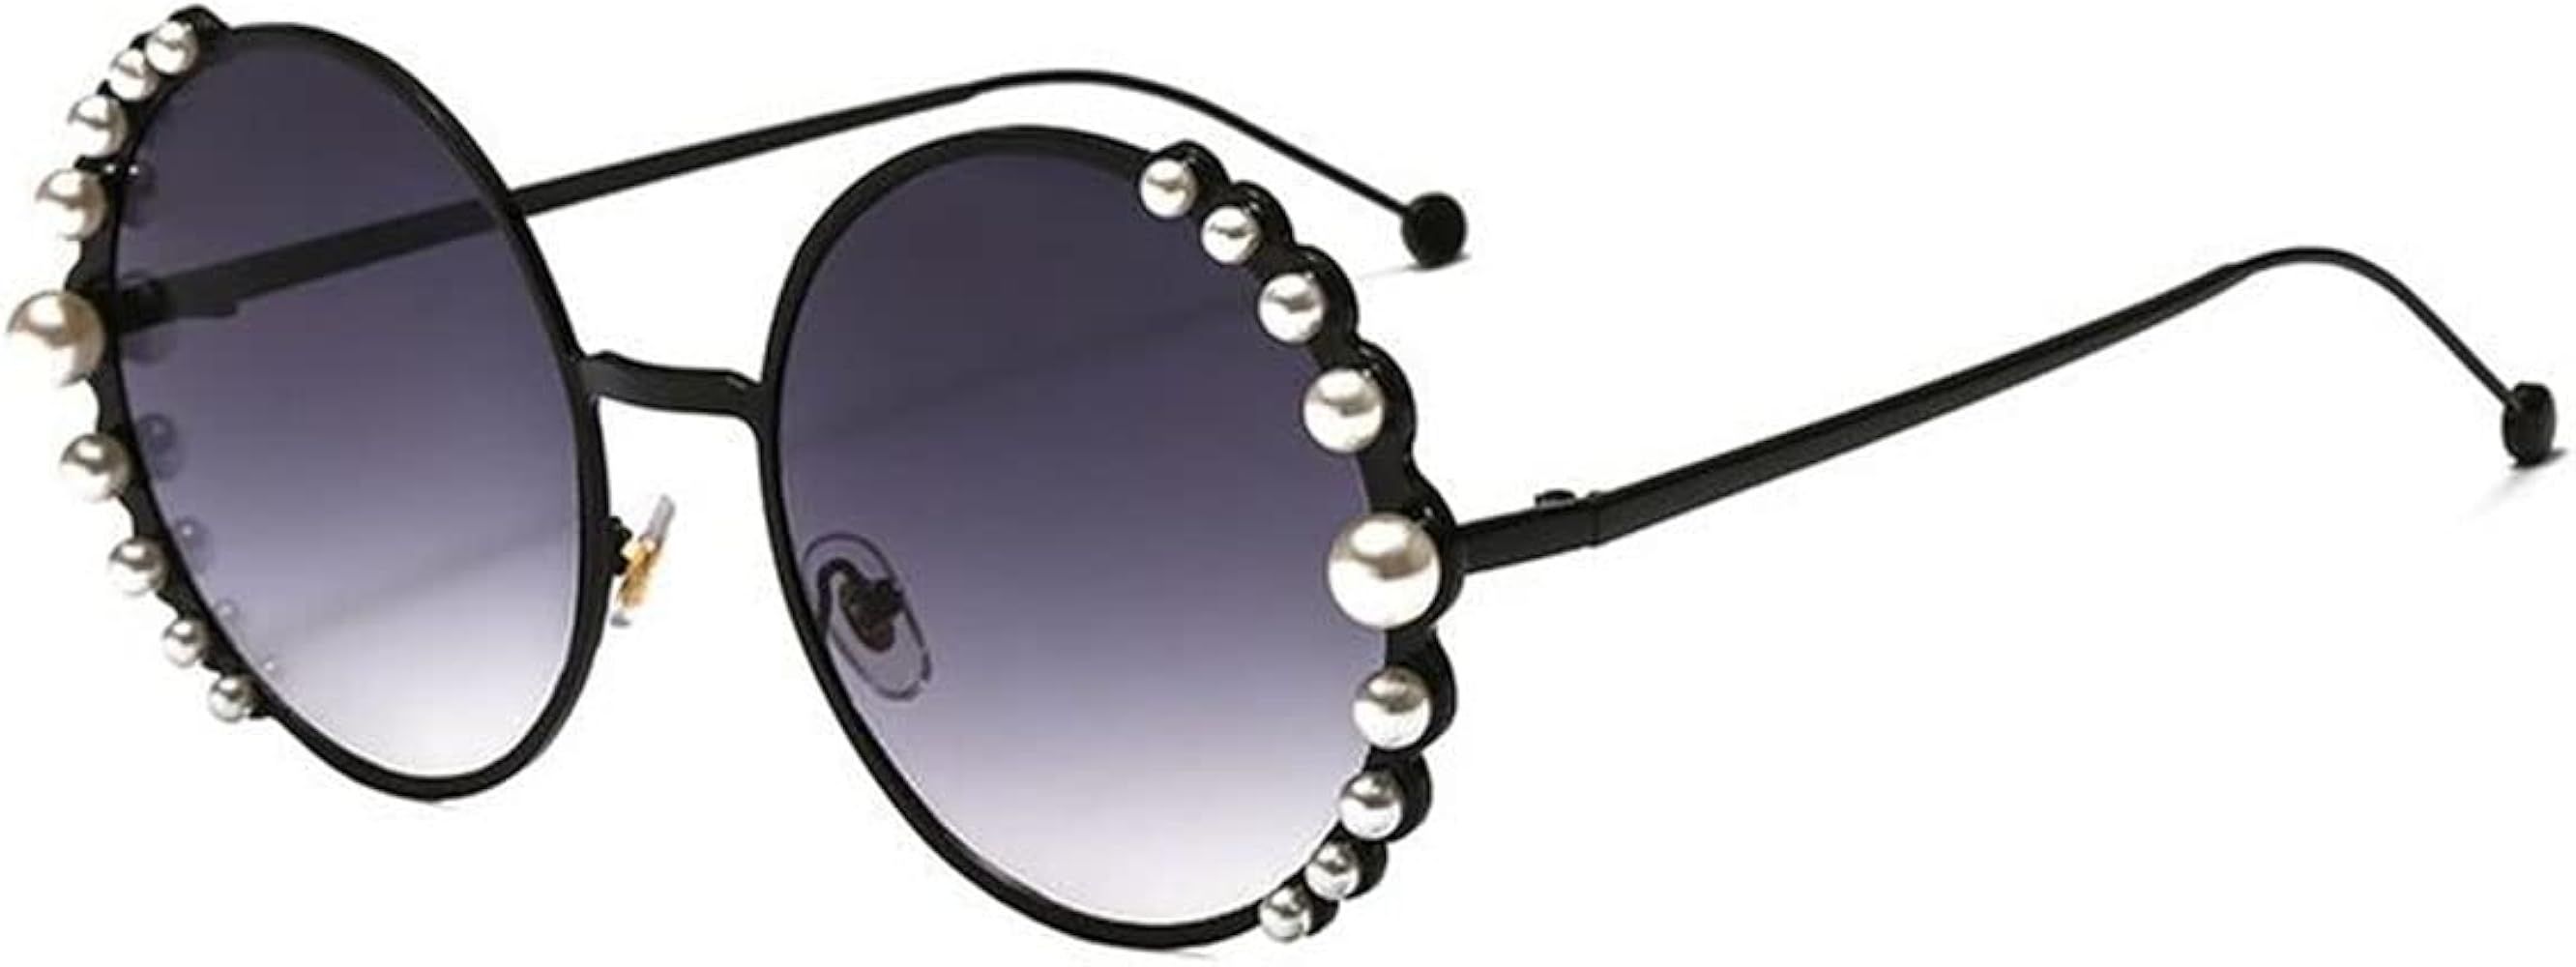 WIIPU Luxury Pearl Sunglasses Women Fashion Metal Frame Round Sunglasses #2525 | Amazon (US)